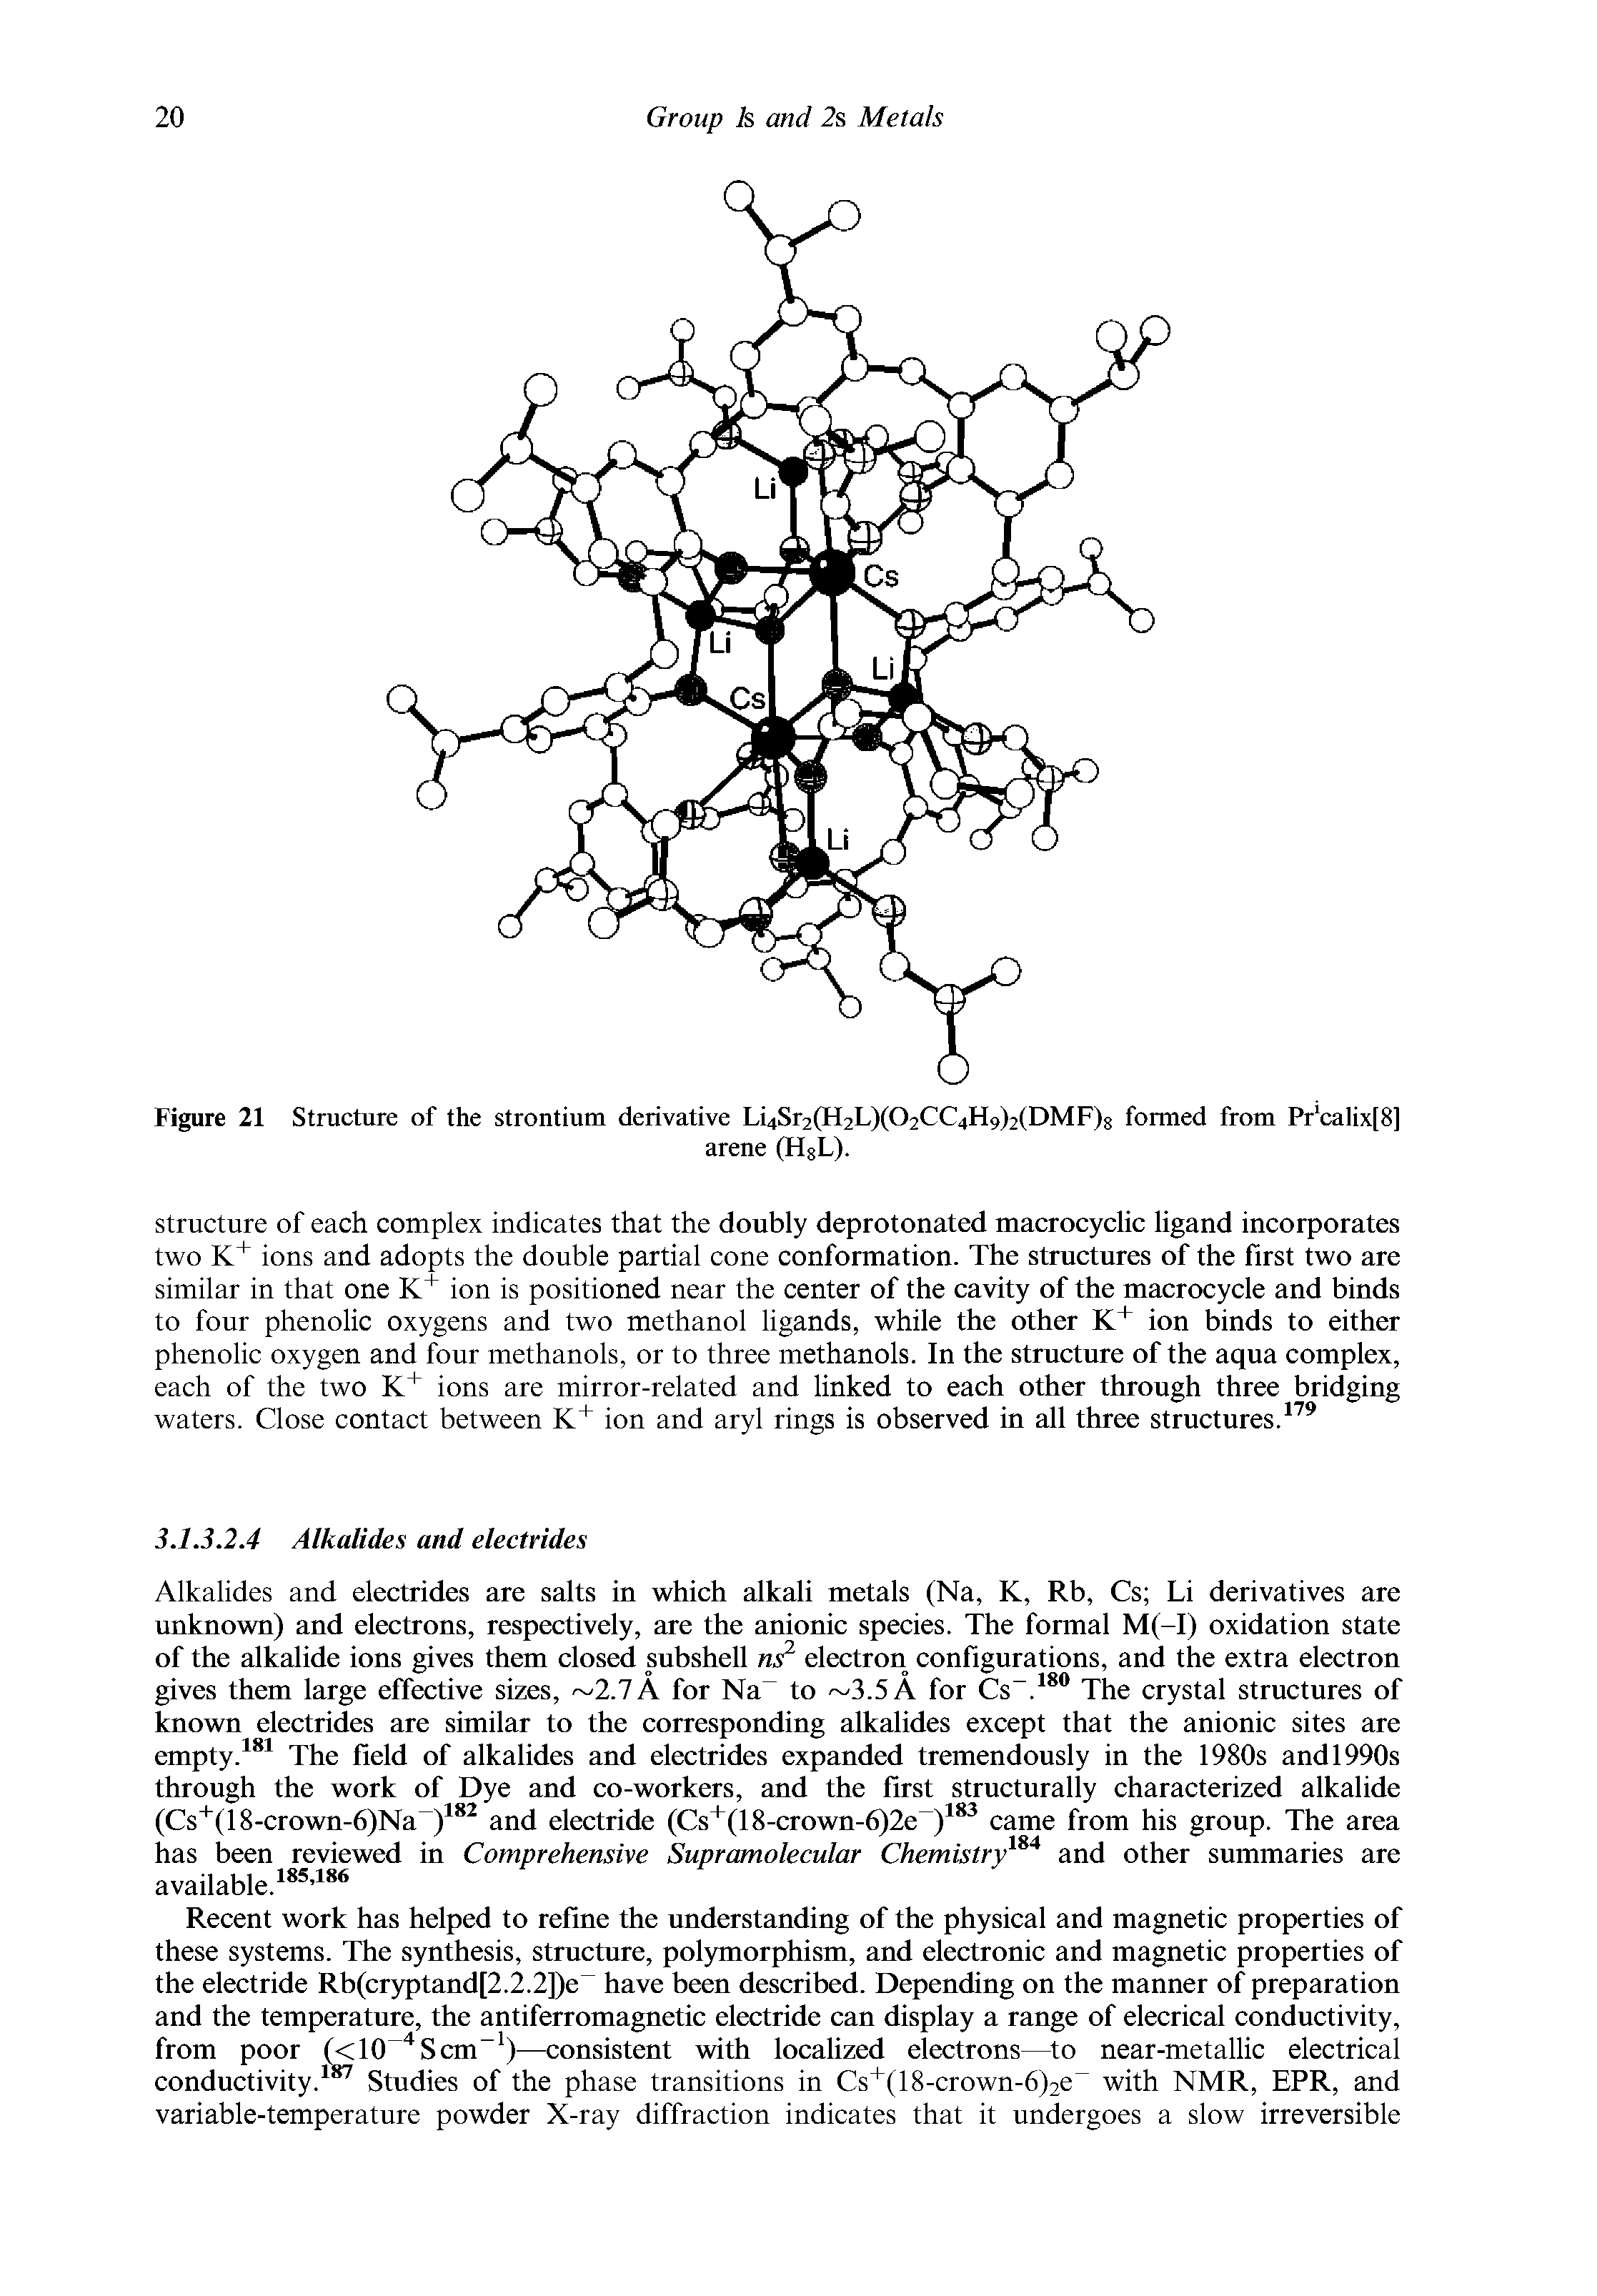 Figure 21 Structure of the strontium derivative Li4Sr2(H2L)(02CC4H9)2(DMF)8 formed from Pr calix[8]...